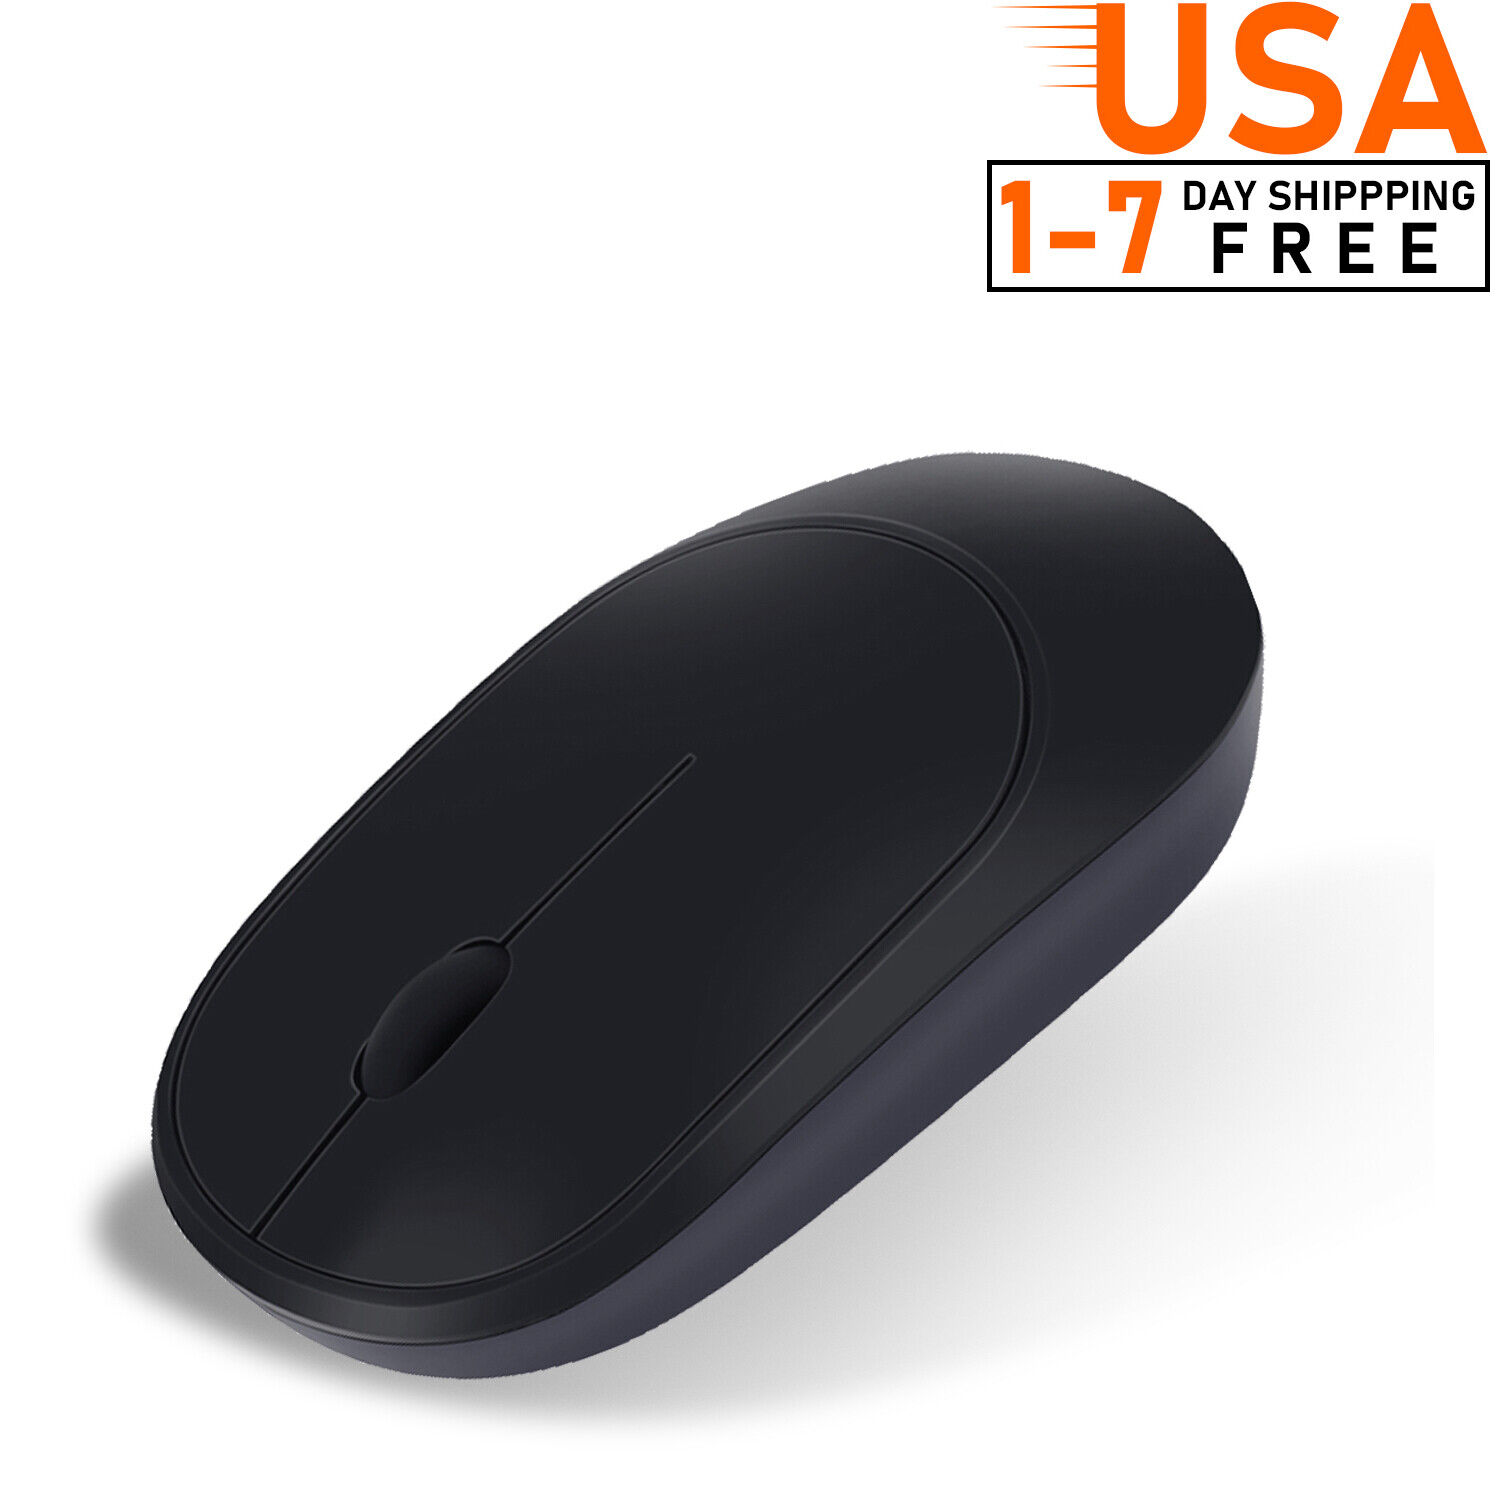 Slim ergonomic design-1600DPI 2.4G Wireless Mouse